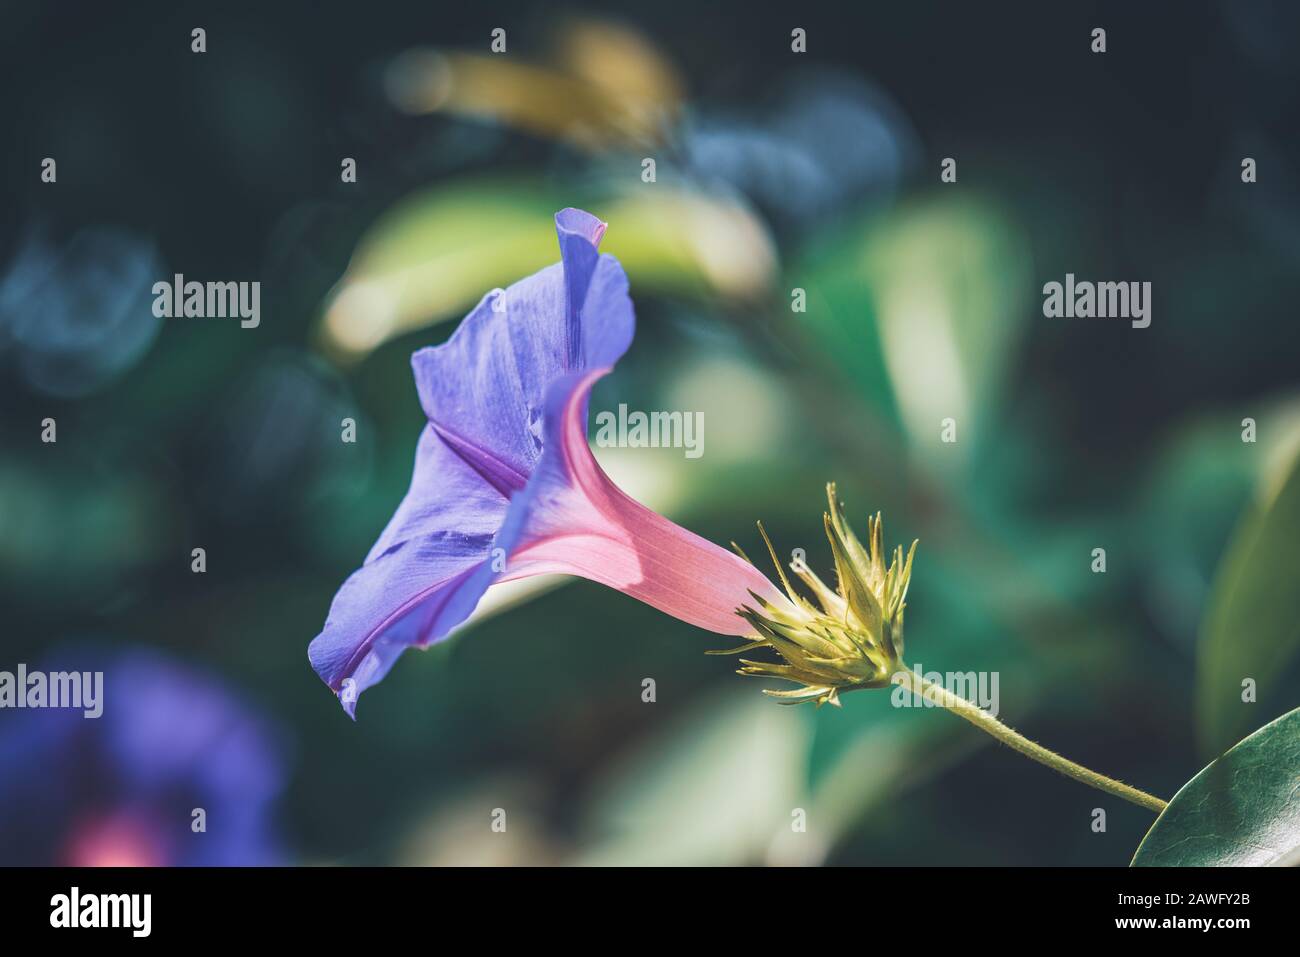 Purple morning glory flower also known as Ipomoea nil 'Grandpa Ott' Stock Photo